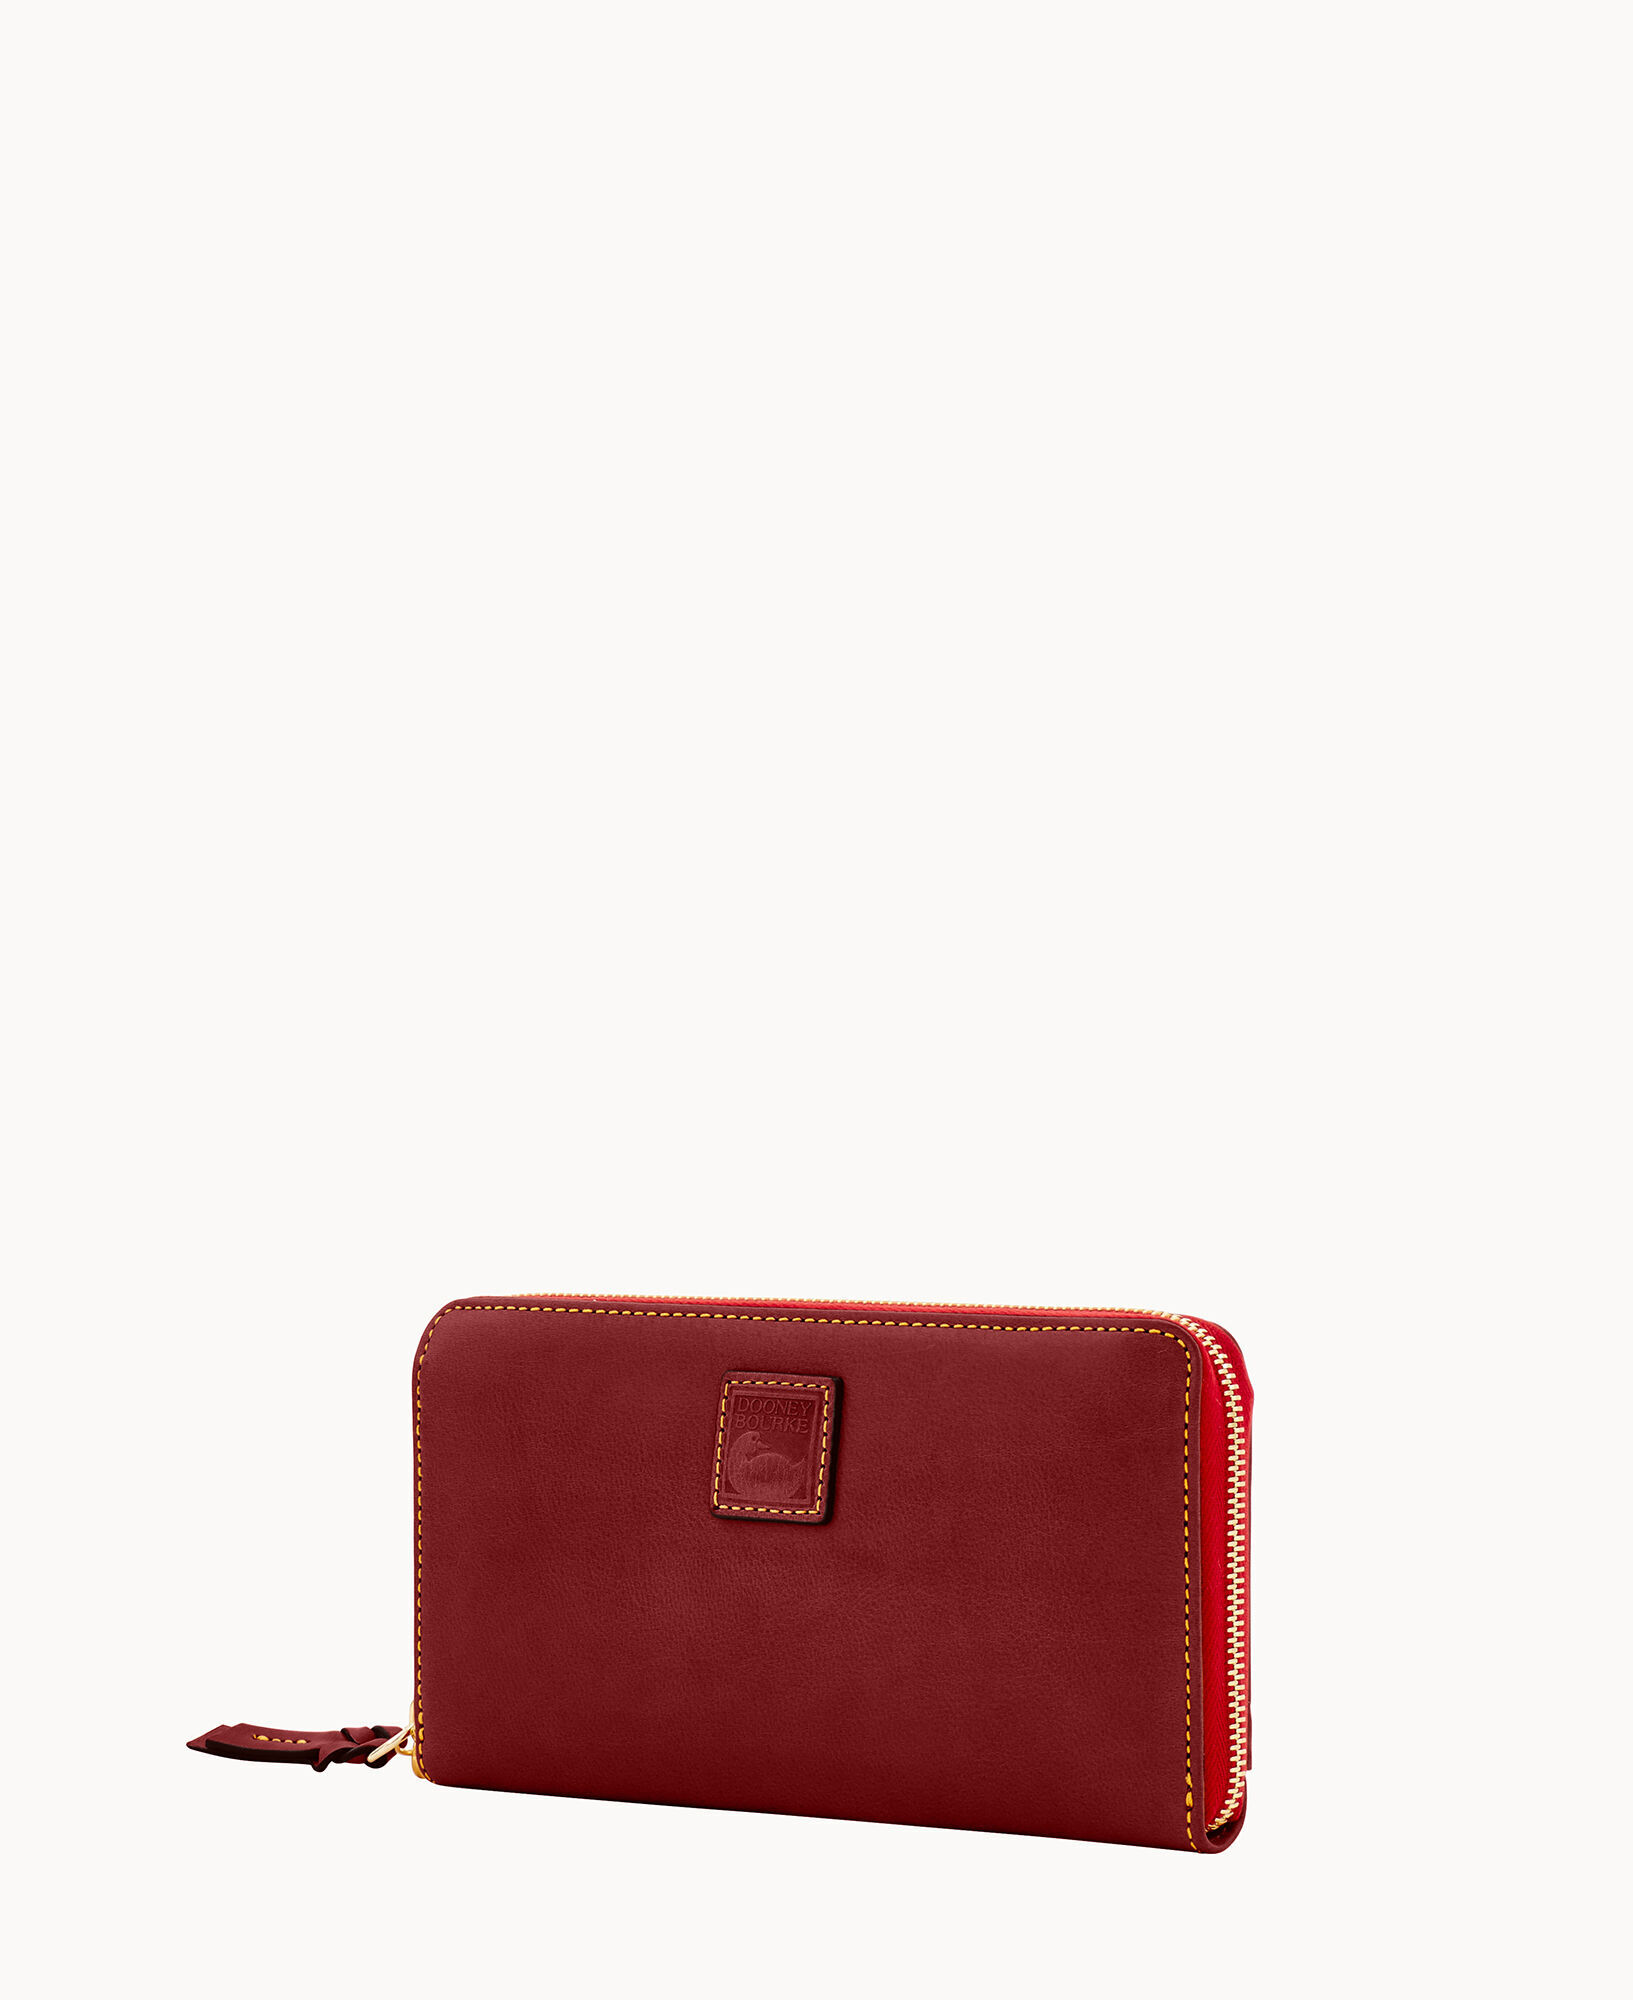 Dooney & Bourke Pebble Leather Large Zip Around Wristlet - Red